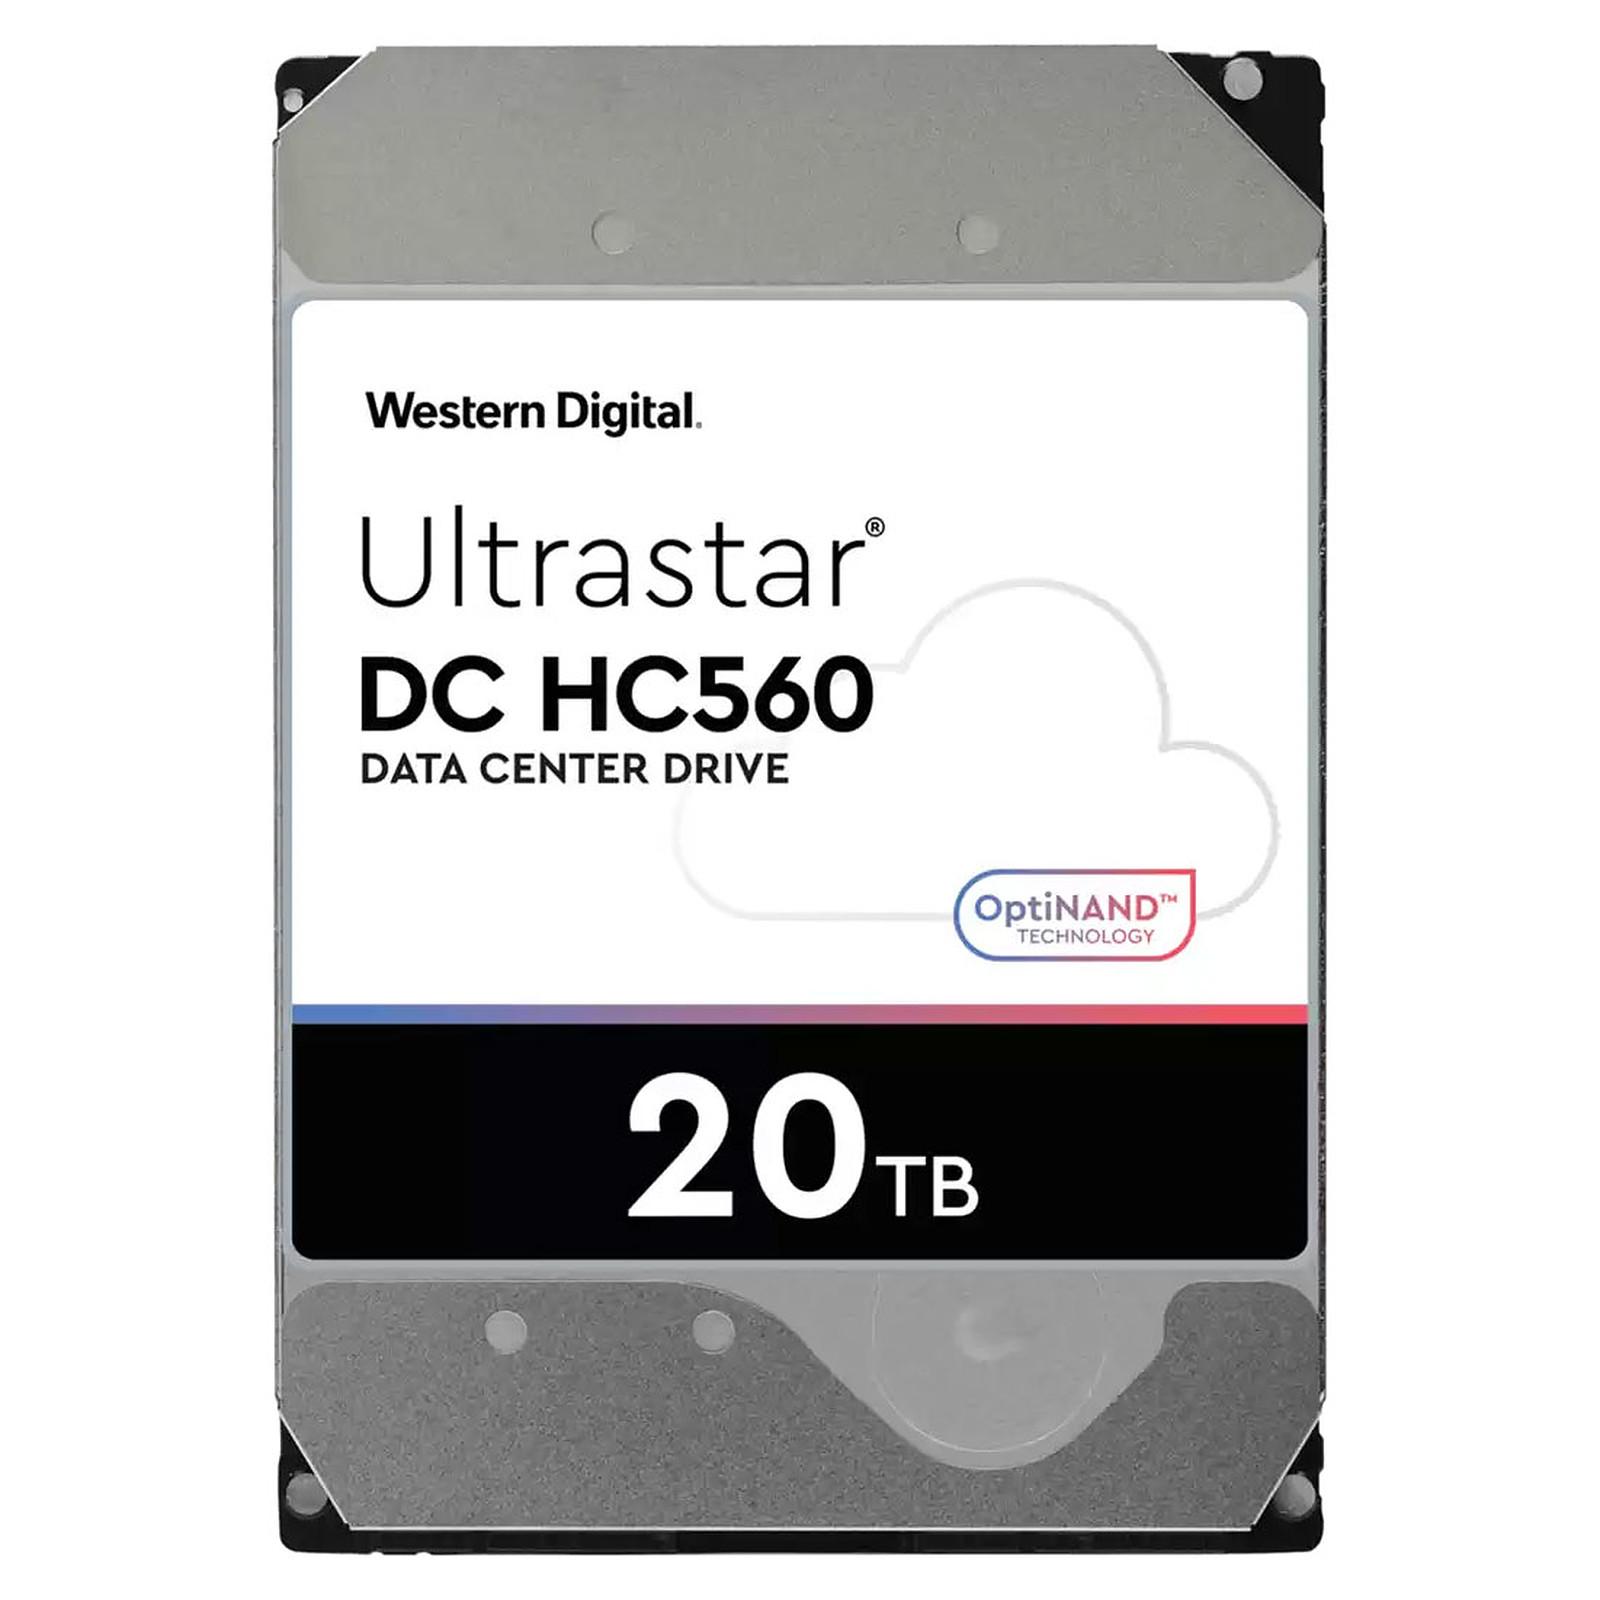 WESTERN DIGITAL ULTRASTAR HC560 20TB 7200RPM 512M SATA 3.5"